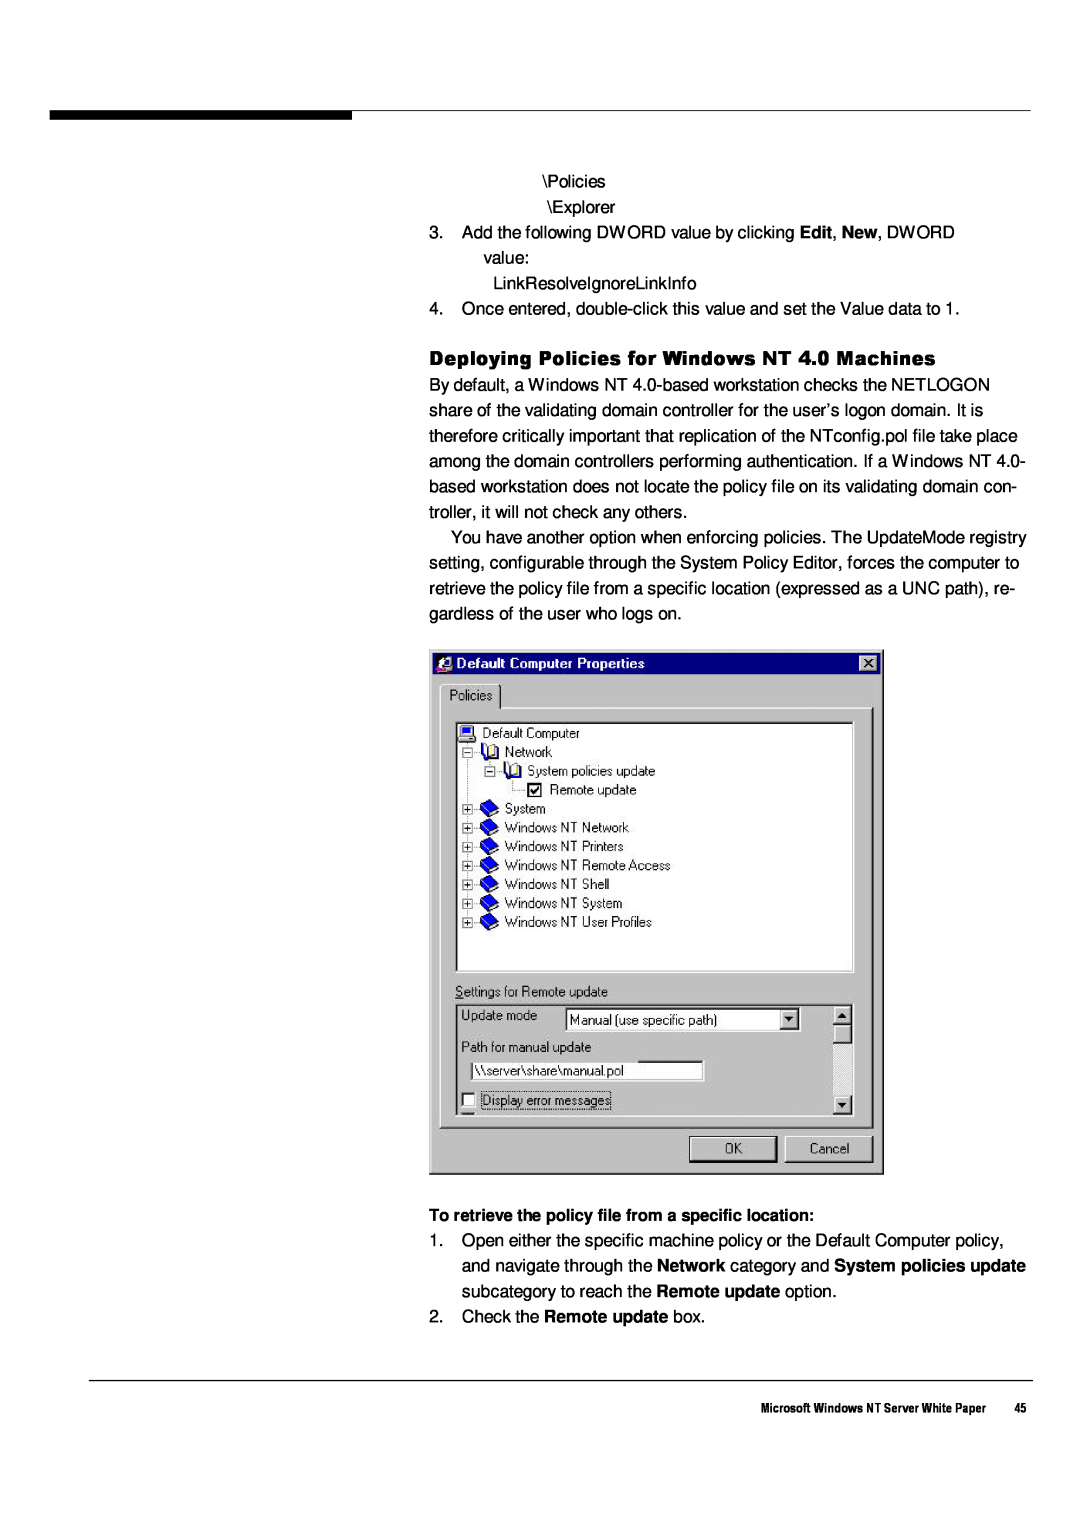 Microsoft manual Deploying Policies for Windows NT 4.0 Machines 